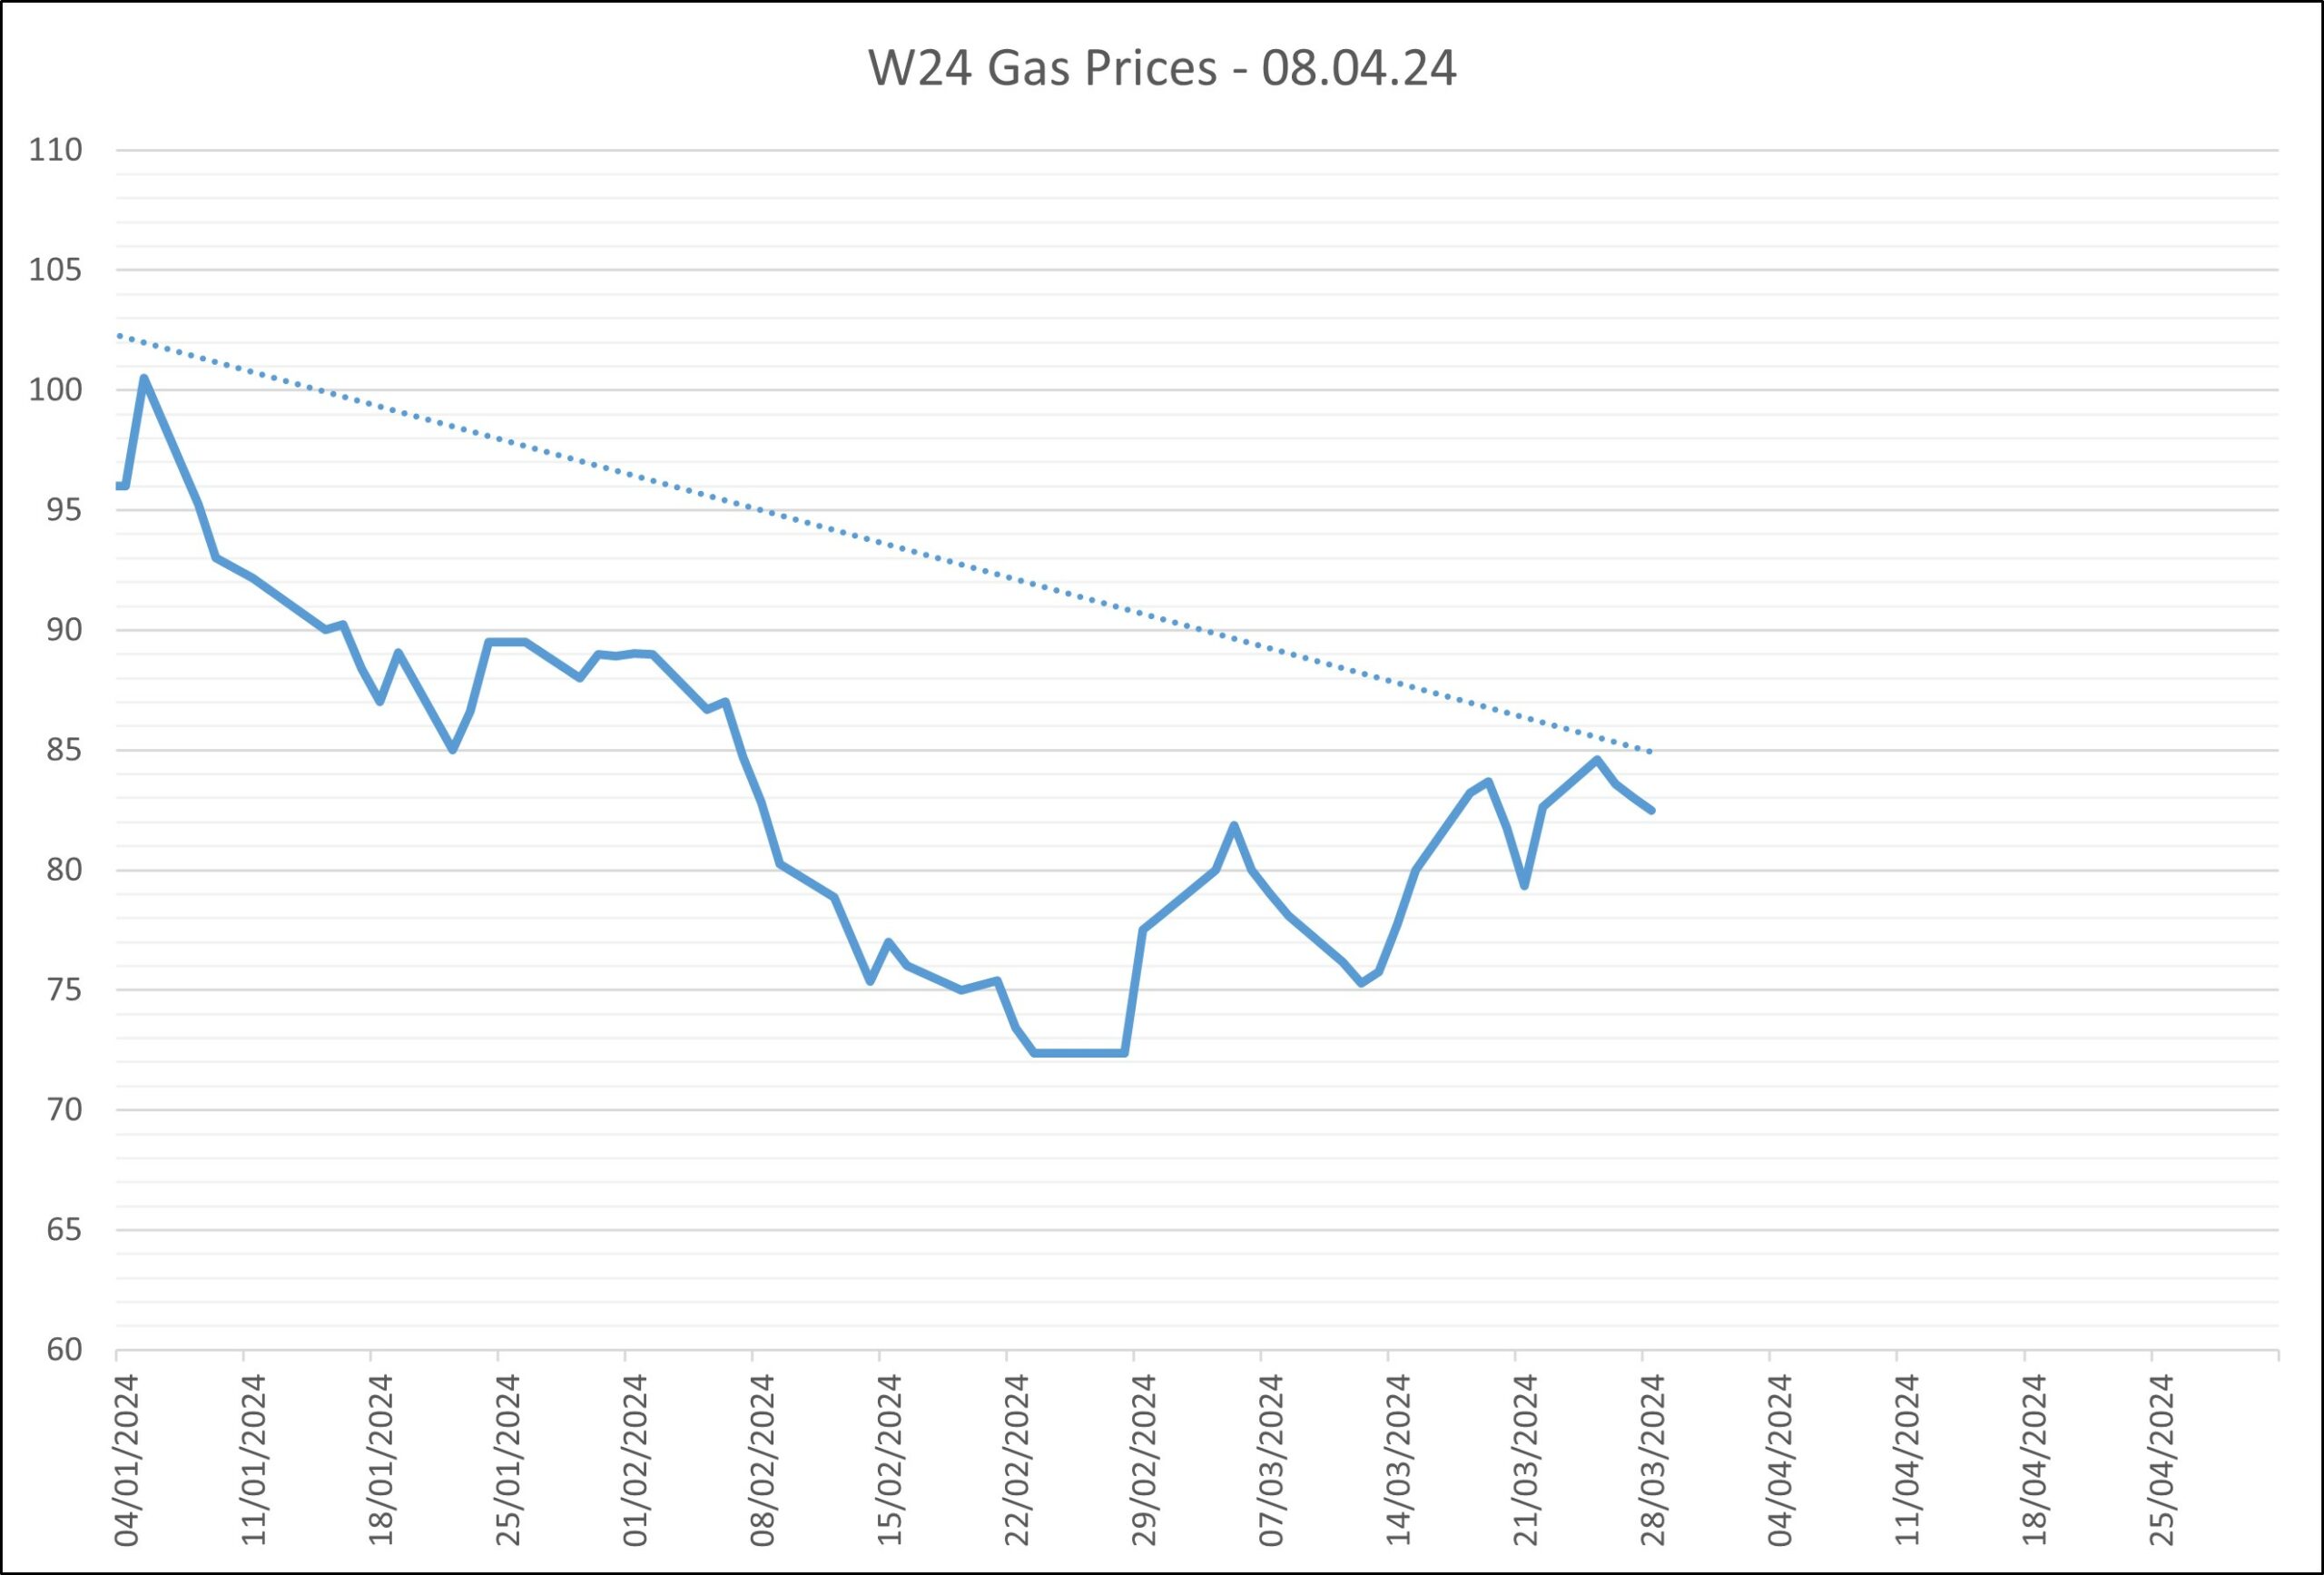 wholesale gas price charts Sum24 08.04.24